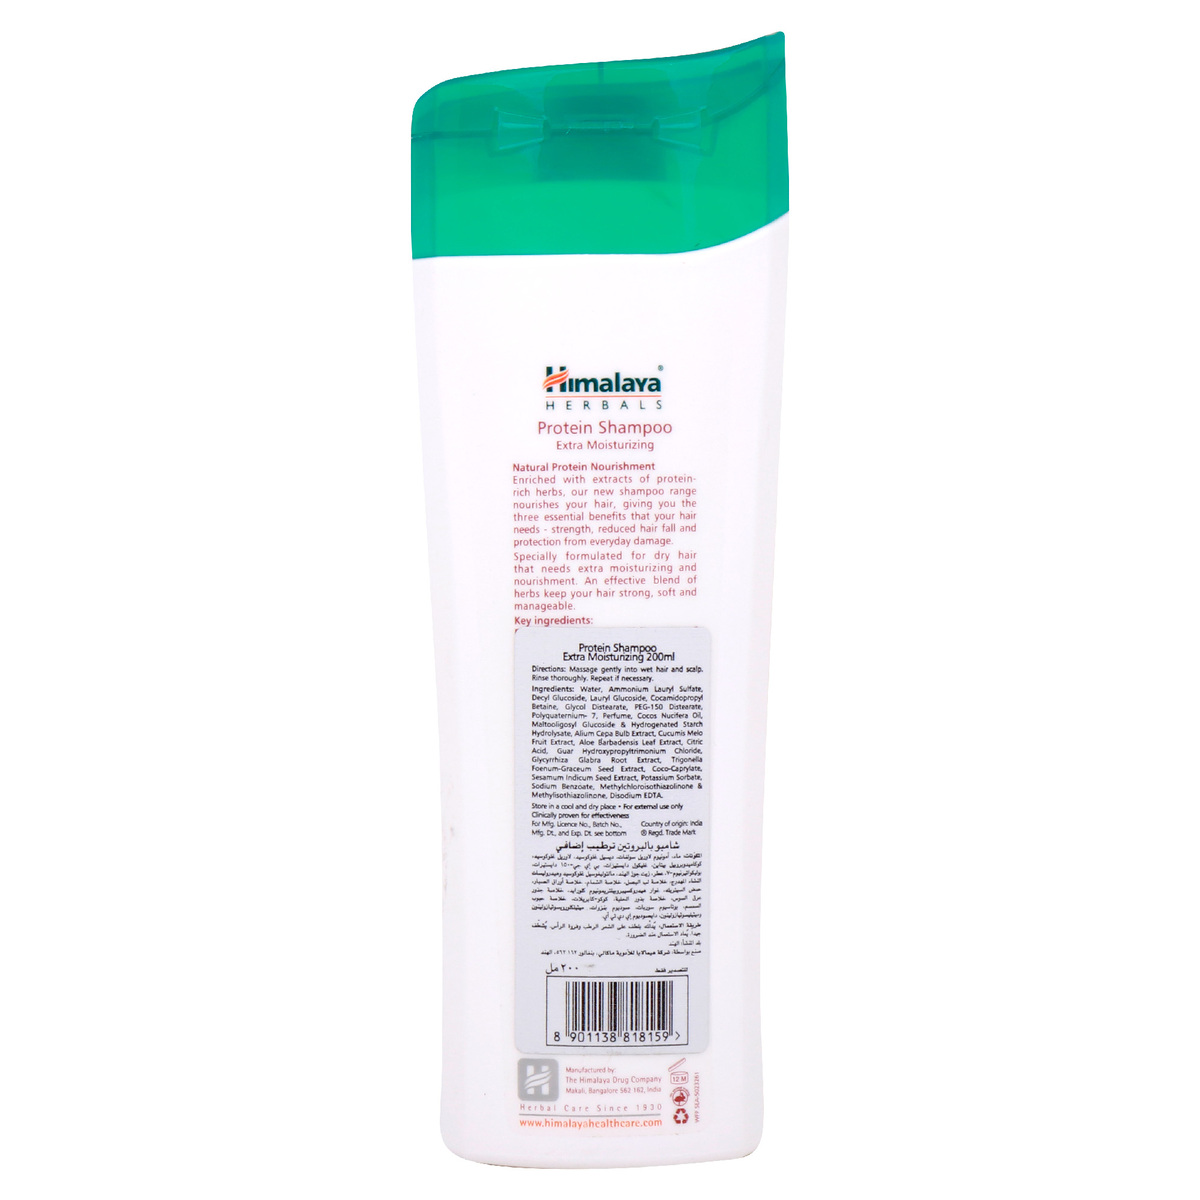 Himalaya Extra Moisturizing Protein Shampoo, 200 ml